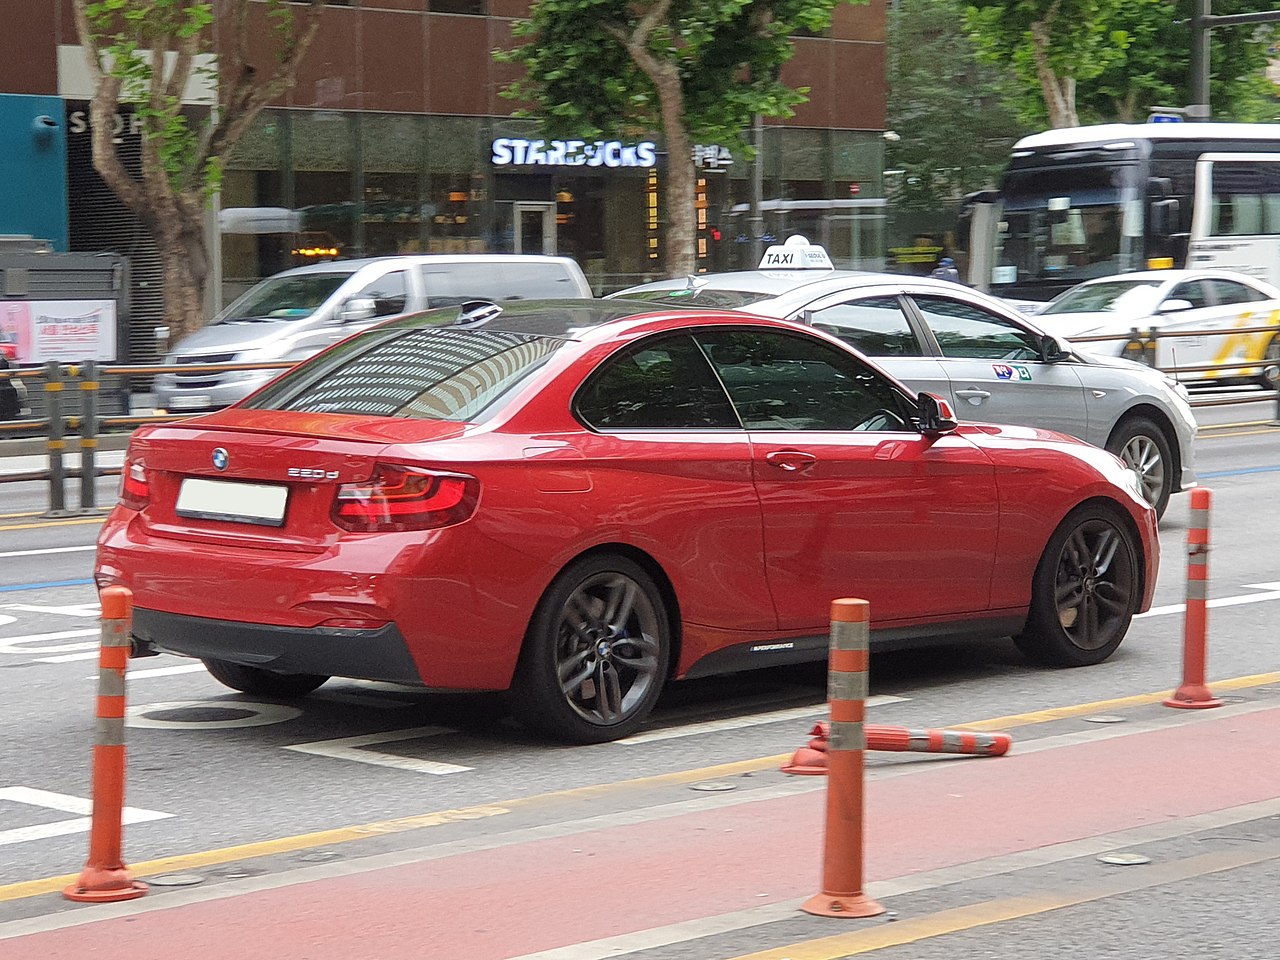 https://upload.wikimedia.org/wikipedia/commons/thumb/3/39/BMW_F22_220d_Melbourne_Red_Metallic_%282%29.jpg/1280px-BMW_F22_220d_Melbourne_Red_Metallic_%282%29.jpg